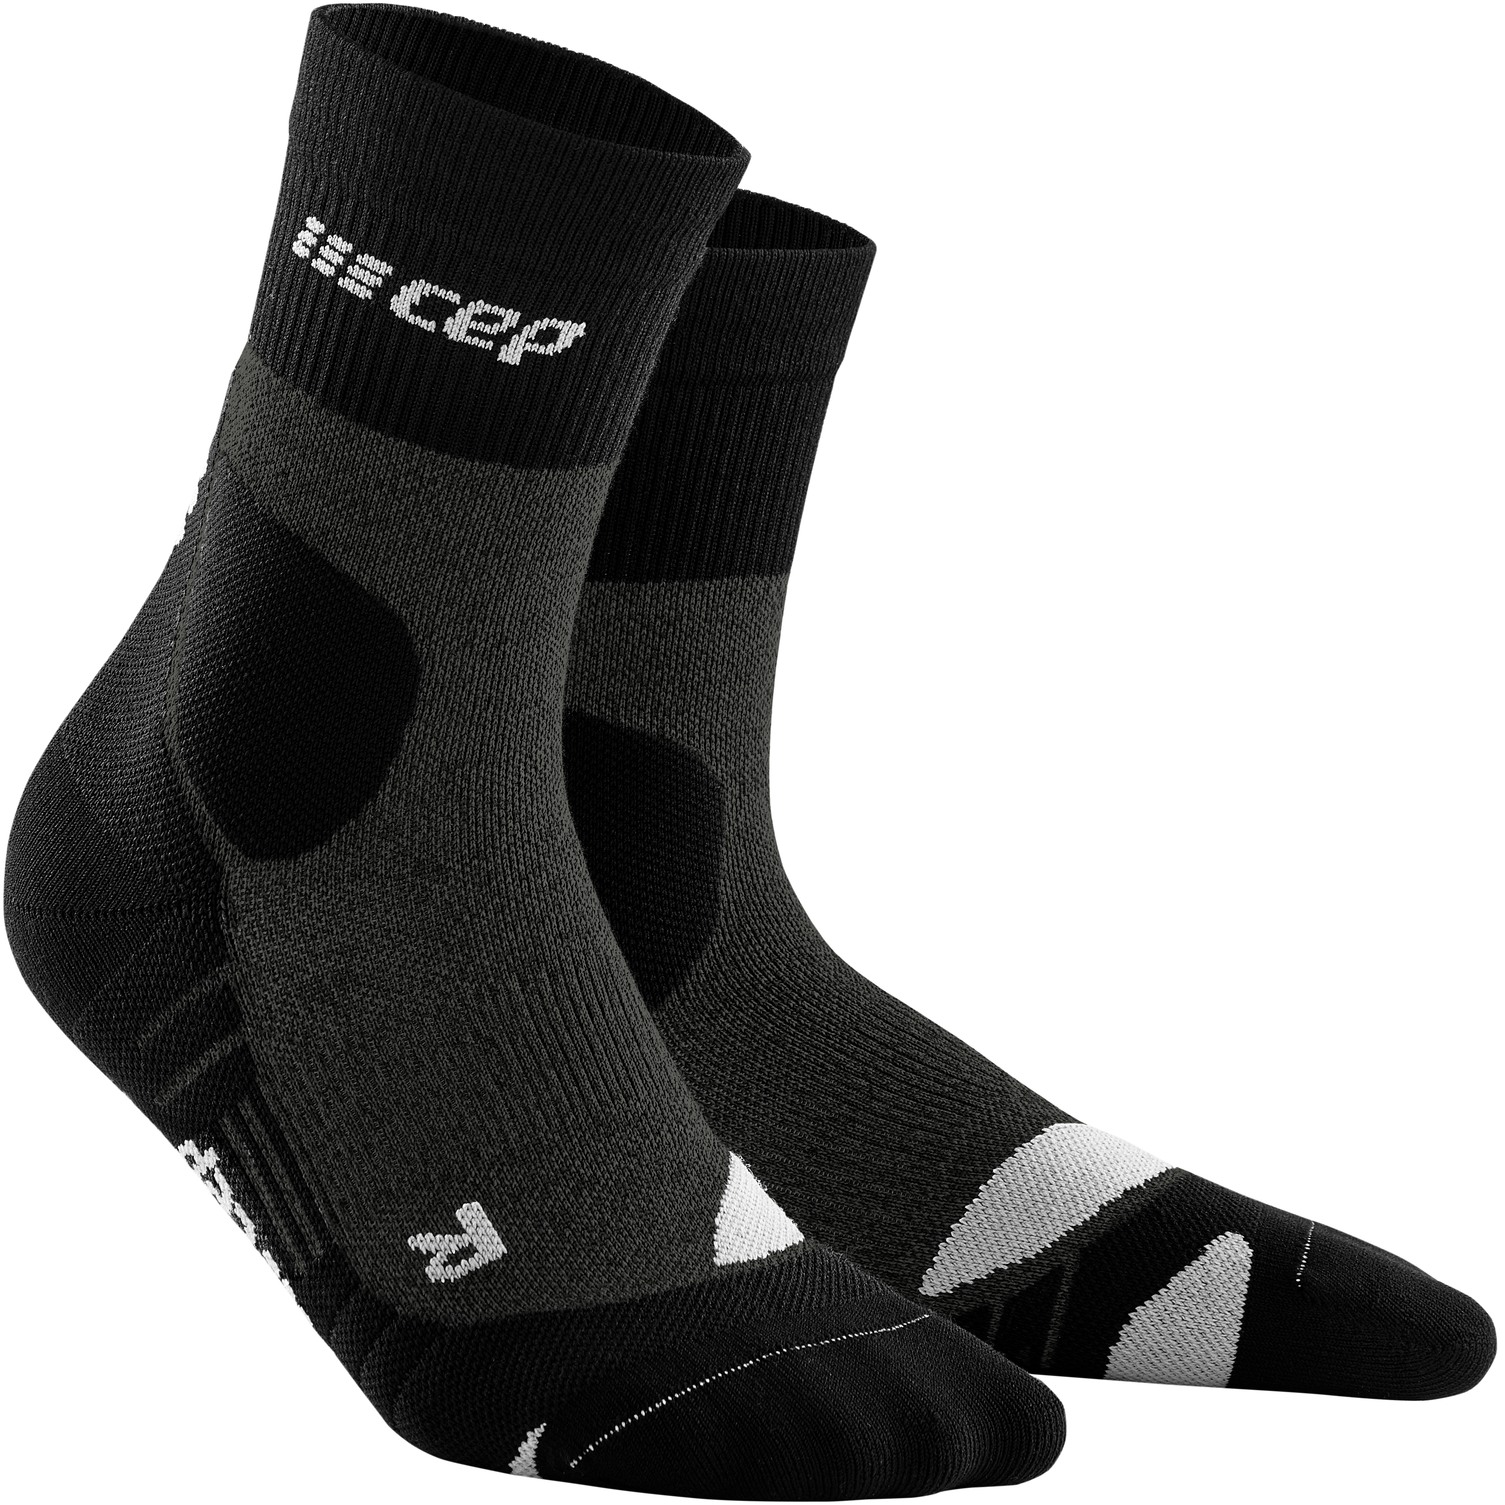 Image of CEP Hiking Merino Mid Cut Compression Socks - stonegrey/grey